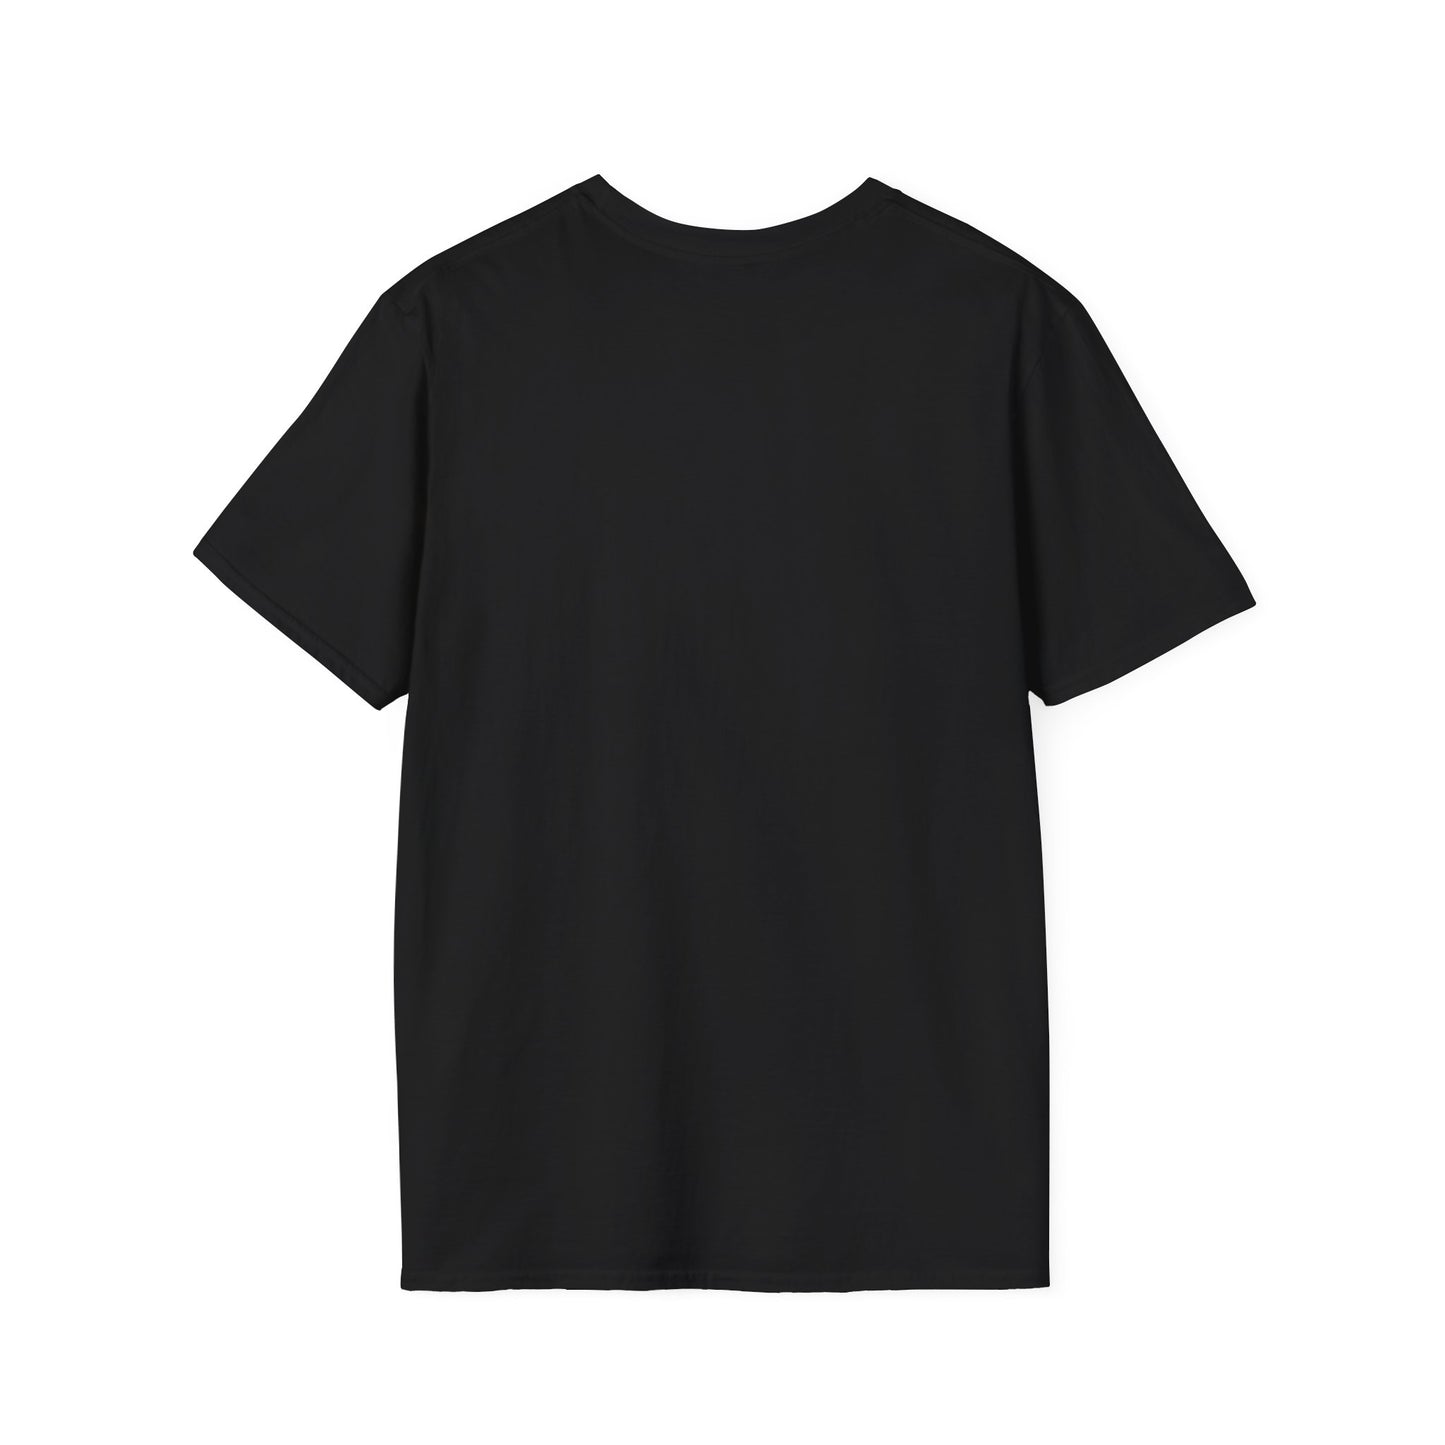 Forgiven Unisex Softstyle T-Shirt